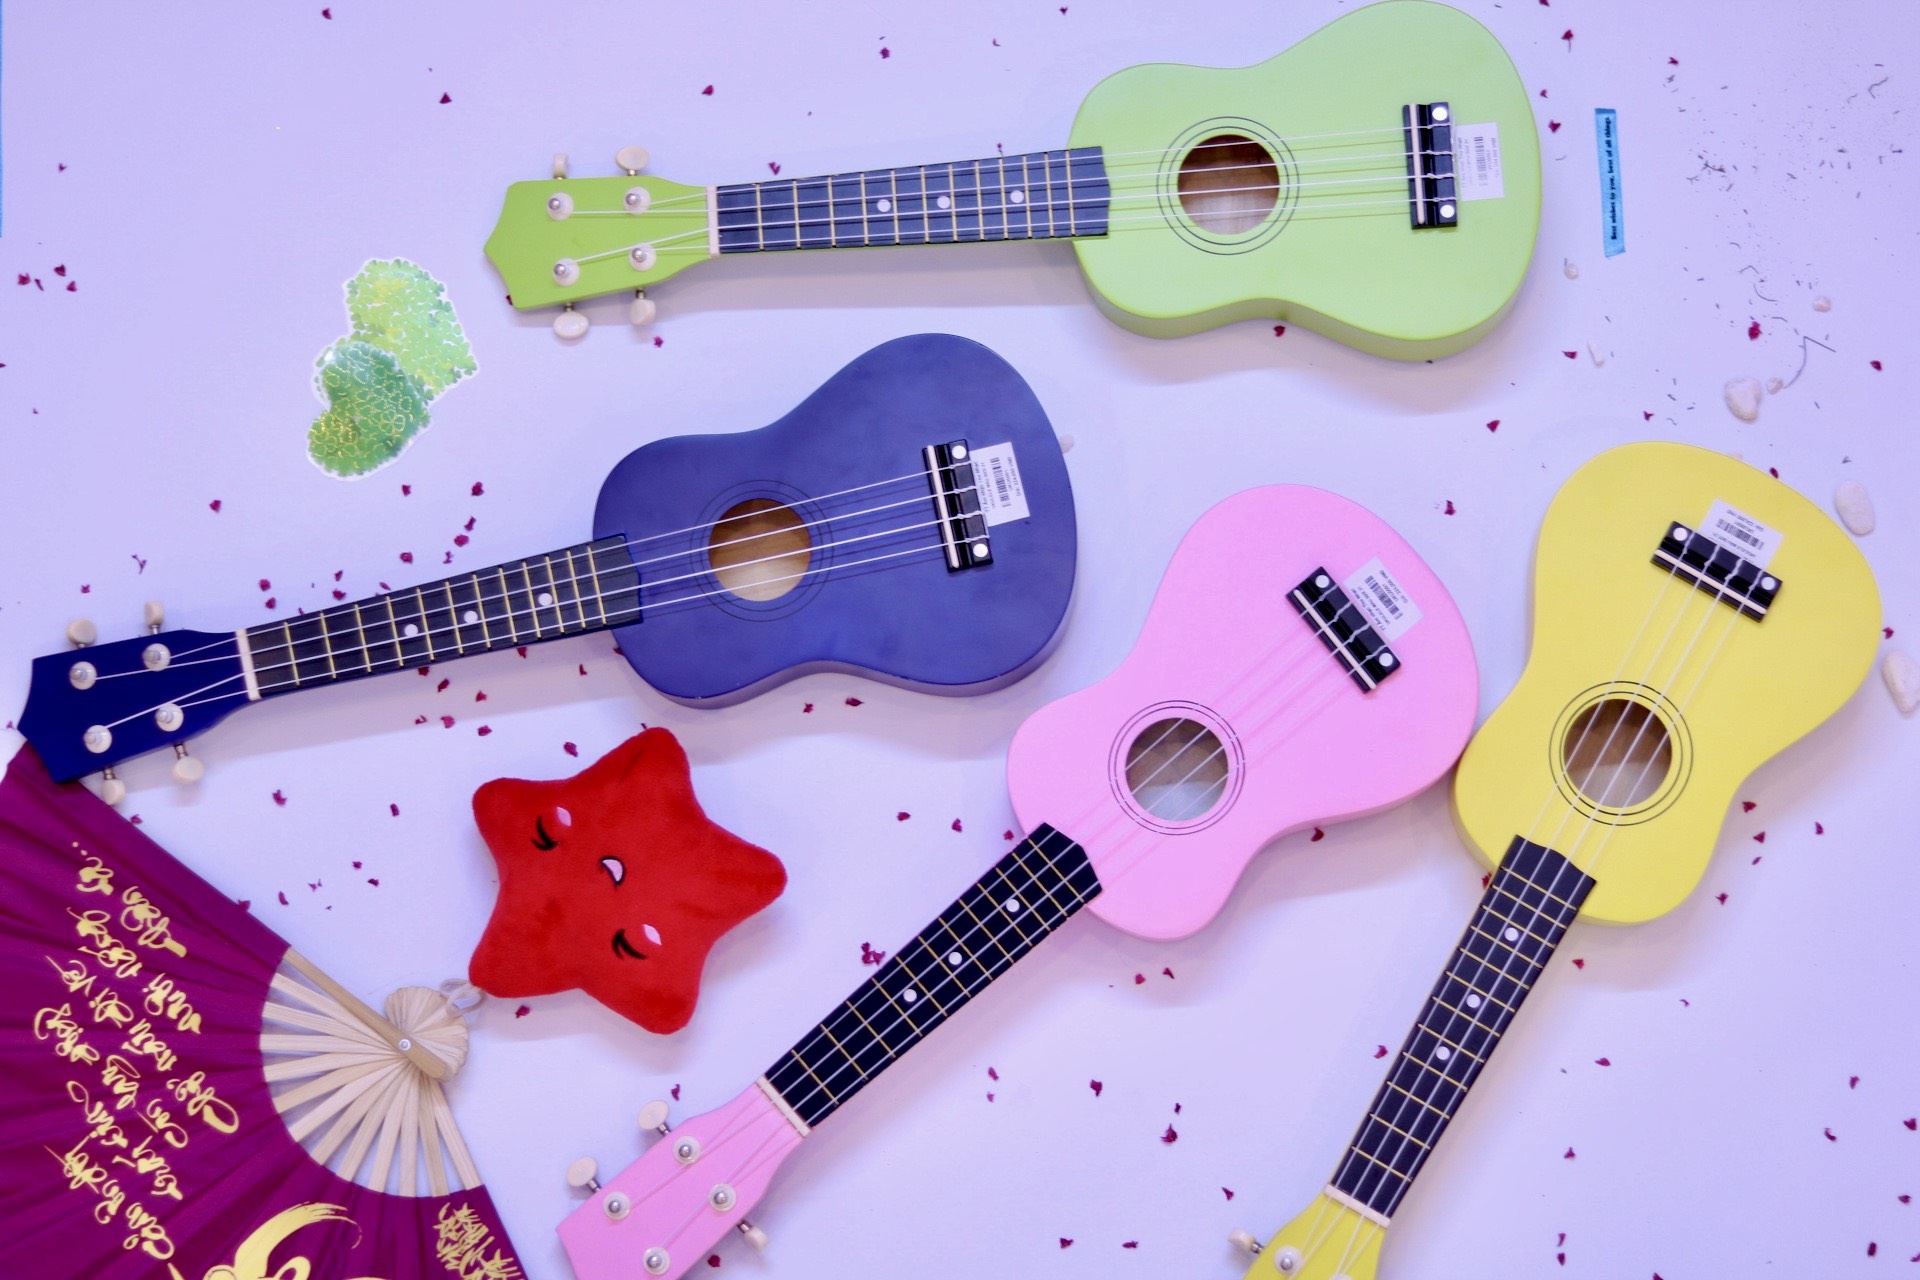 Shop bán đàn ukulele giá rẻ